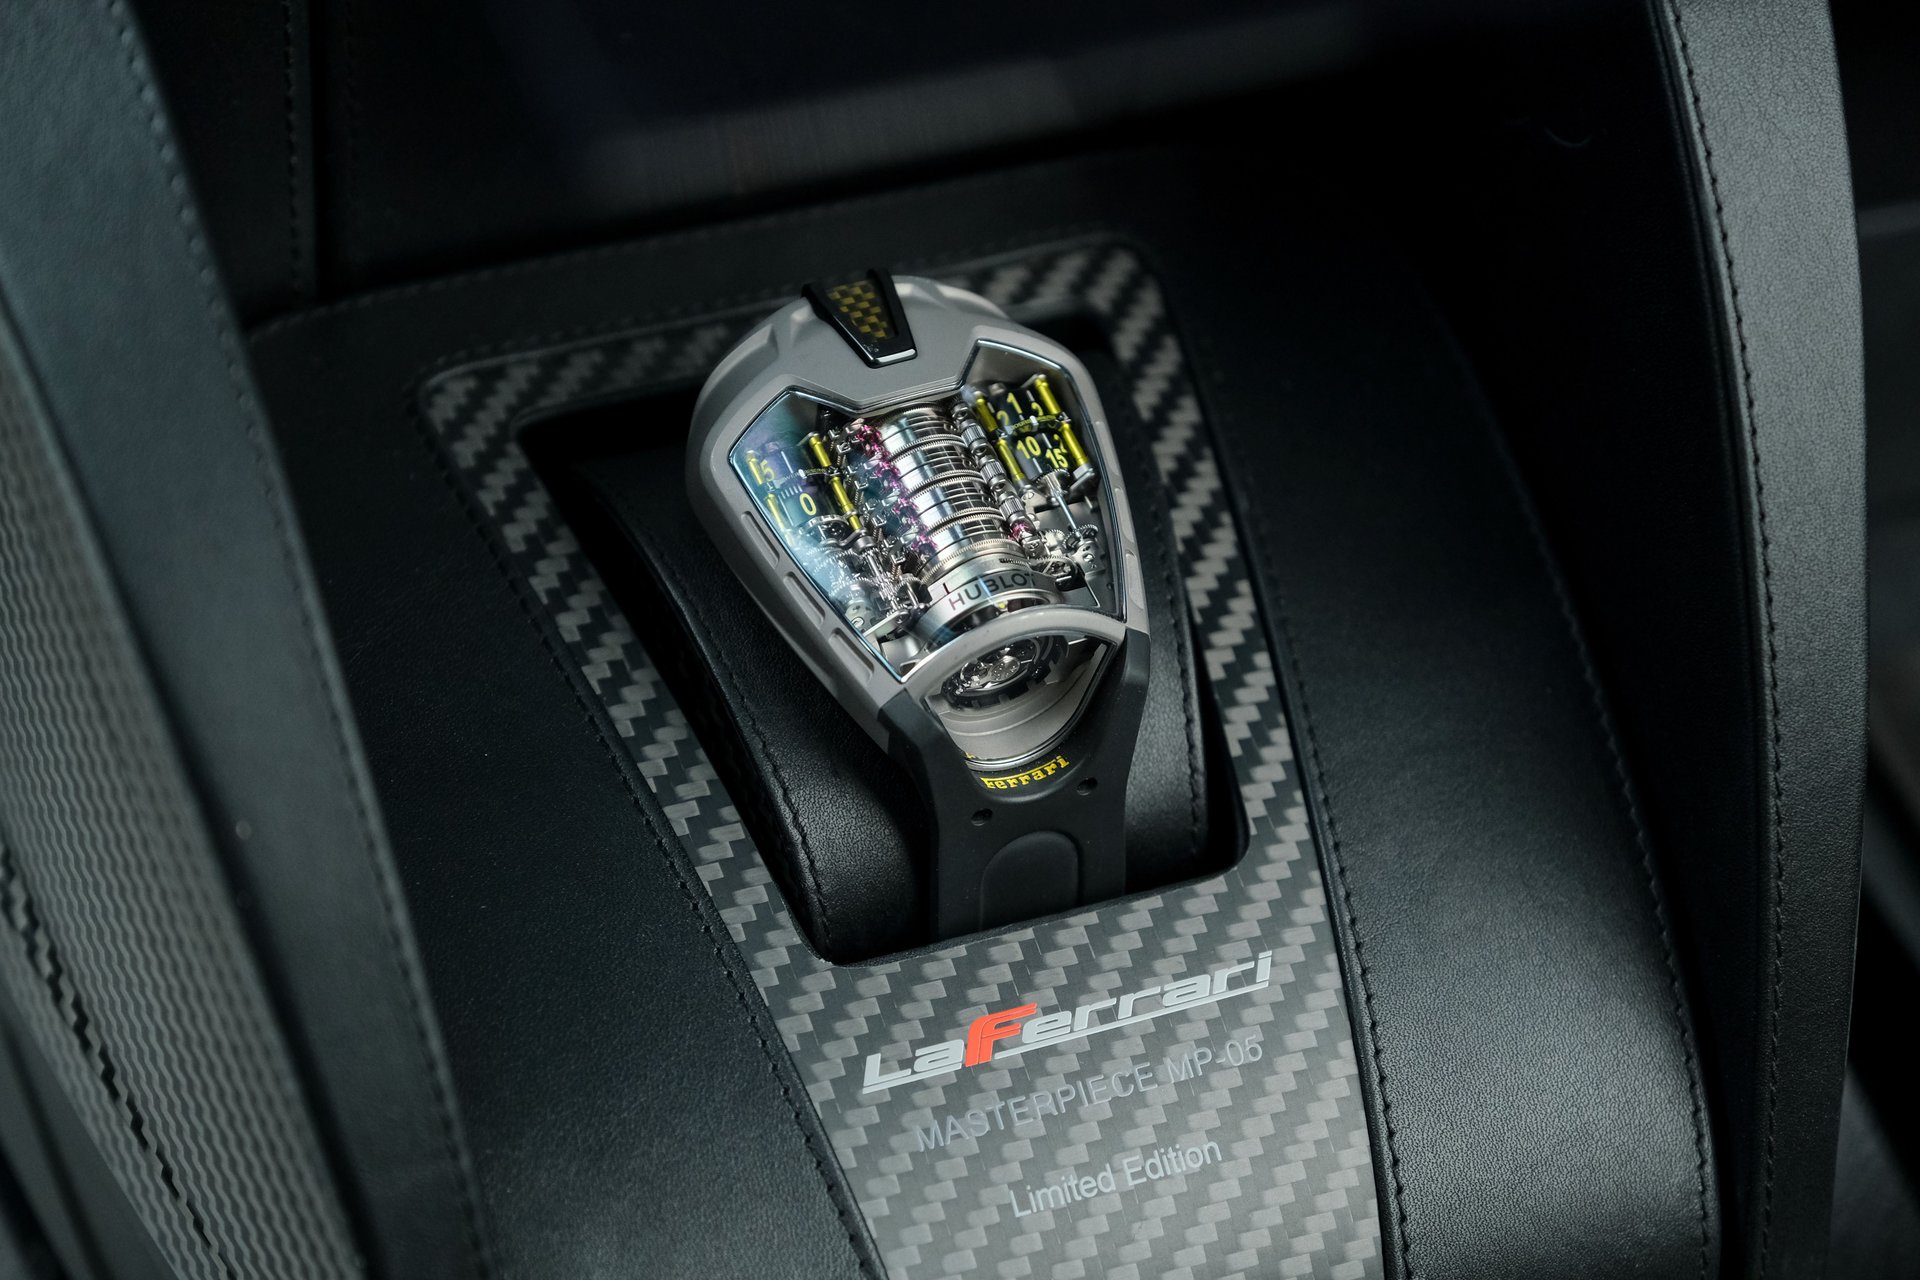 For Sale  Hublot Titanium MP-05 LaFerrari Limited Edition Skeletonized Tourbillion Watch